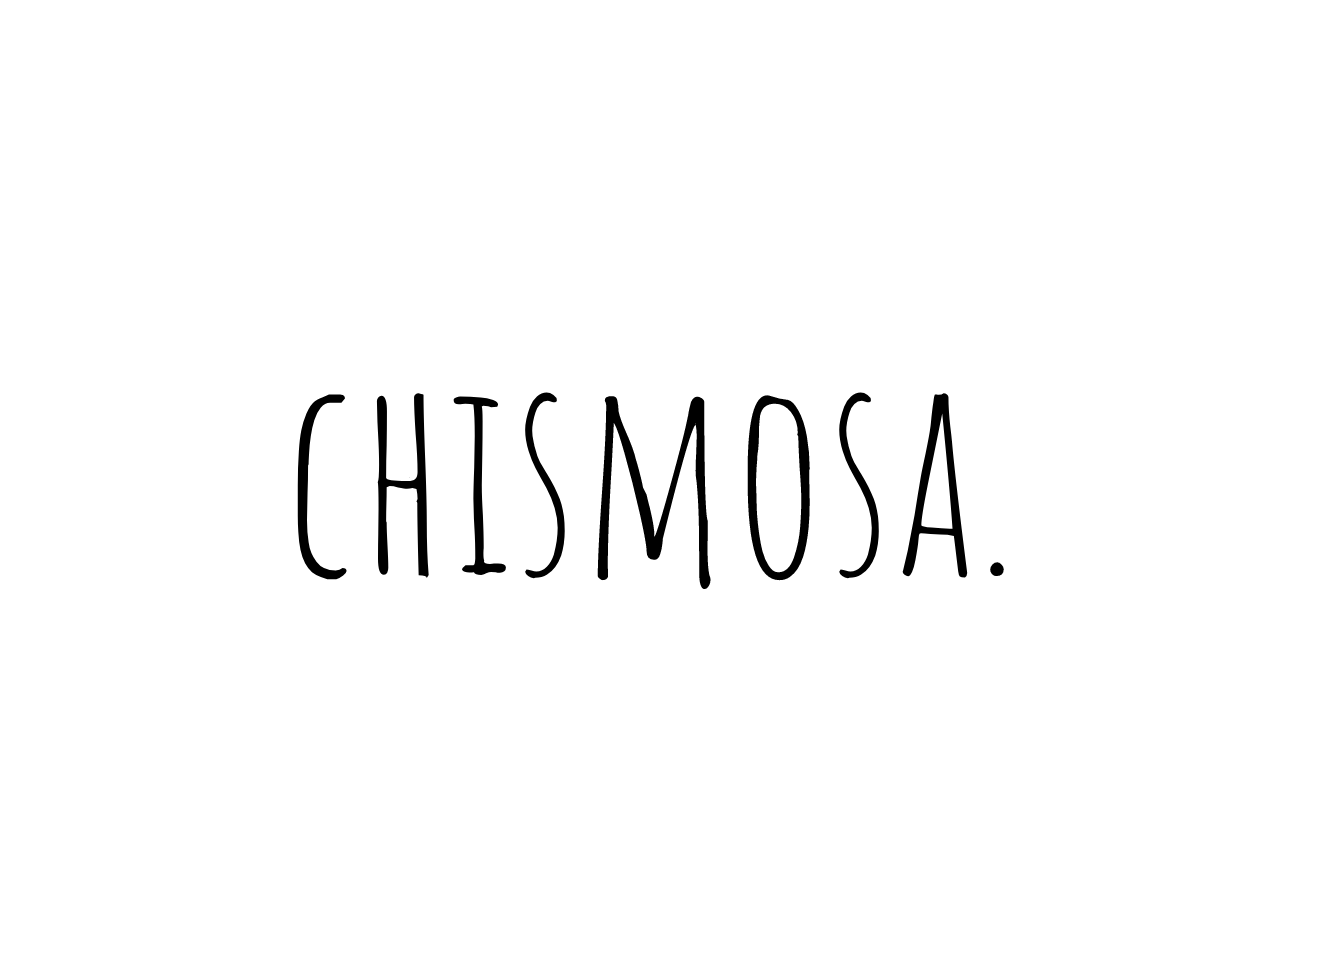 Chismosa - White Cropped Shirt